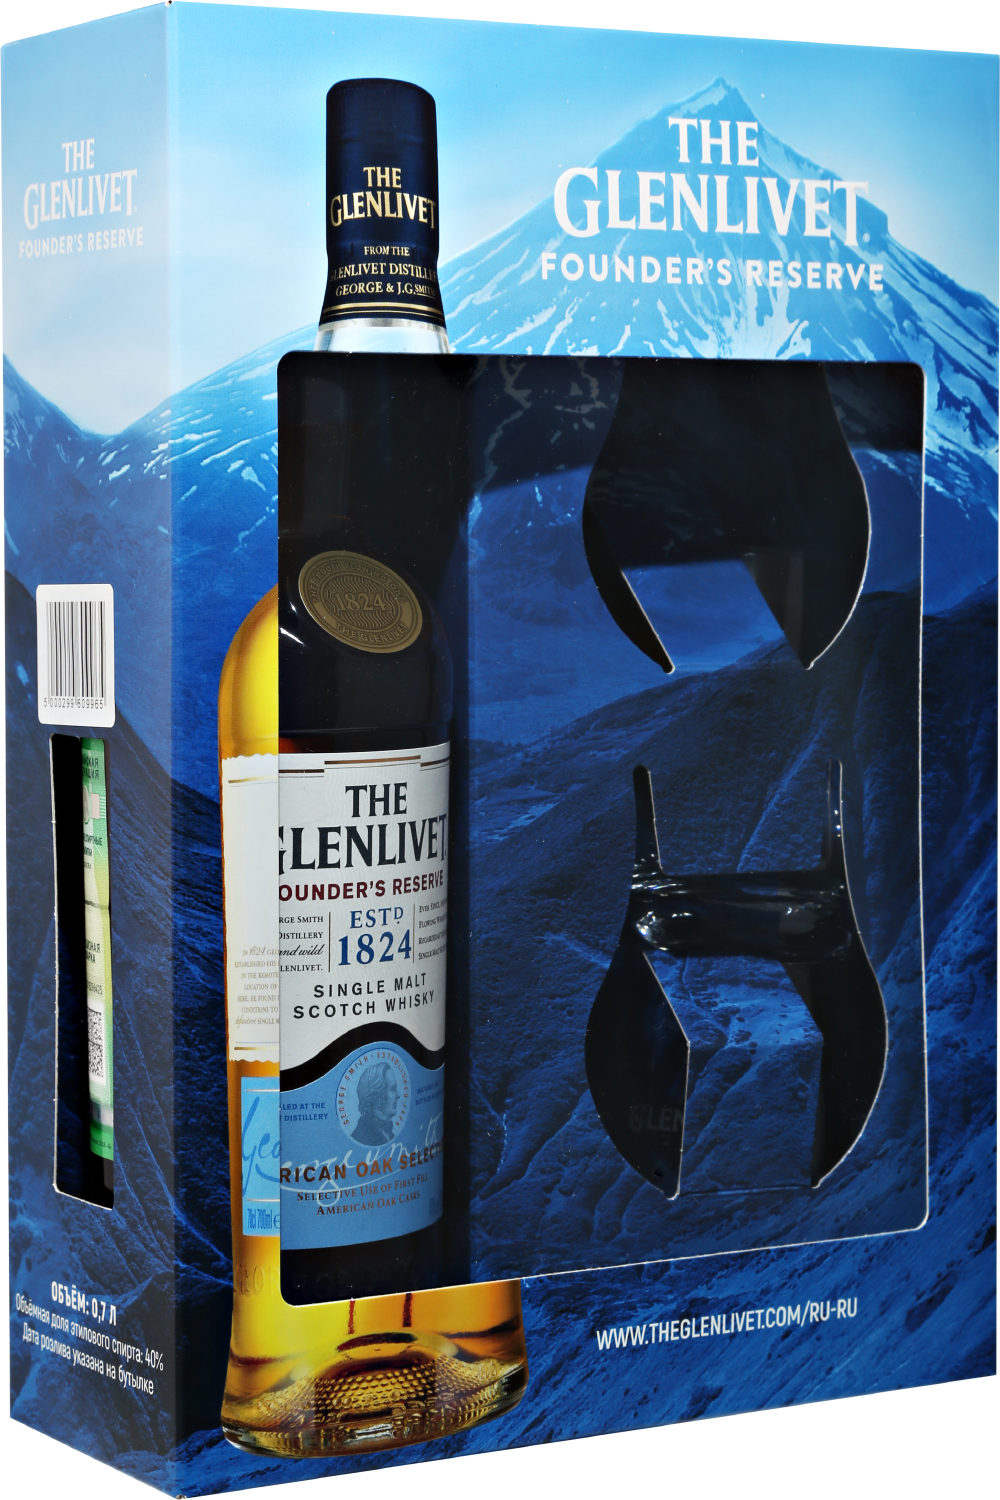 The Glenlivet Founder's Reserve Single Malt Scotch Whisky (gift box with 2 glasses) the glenlivet french oak reserve single malt scotch whisky 15 y o gift box